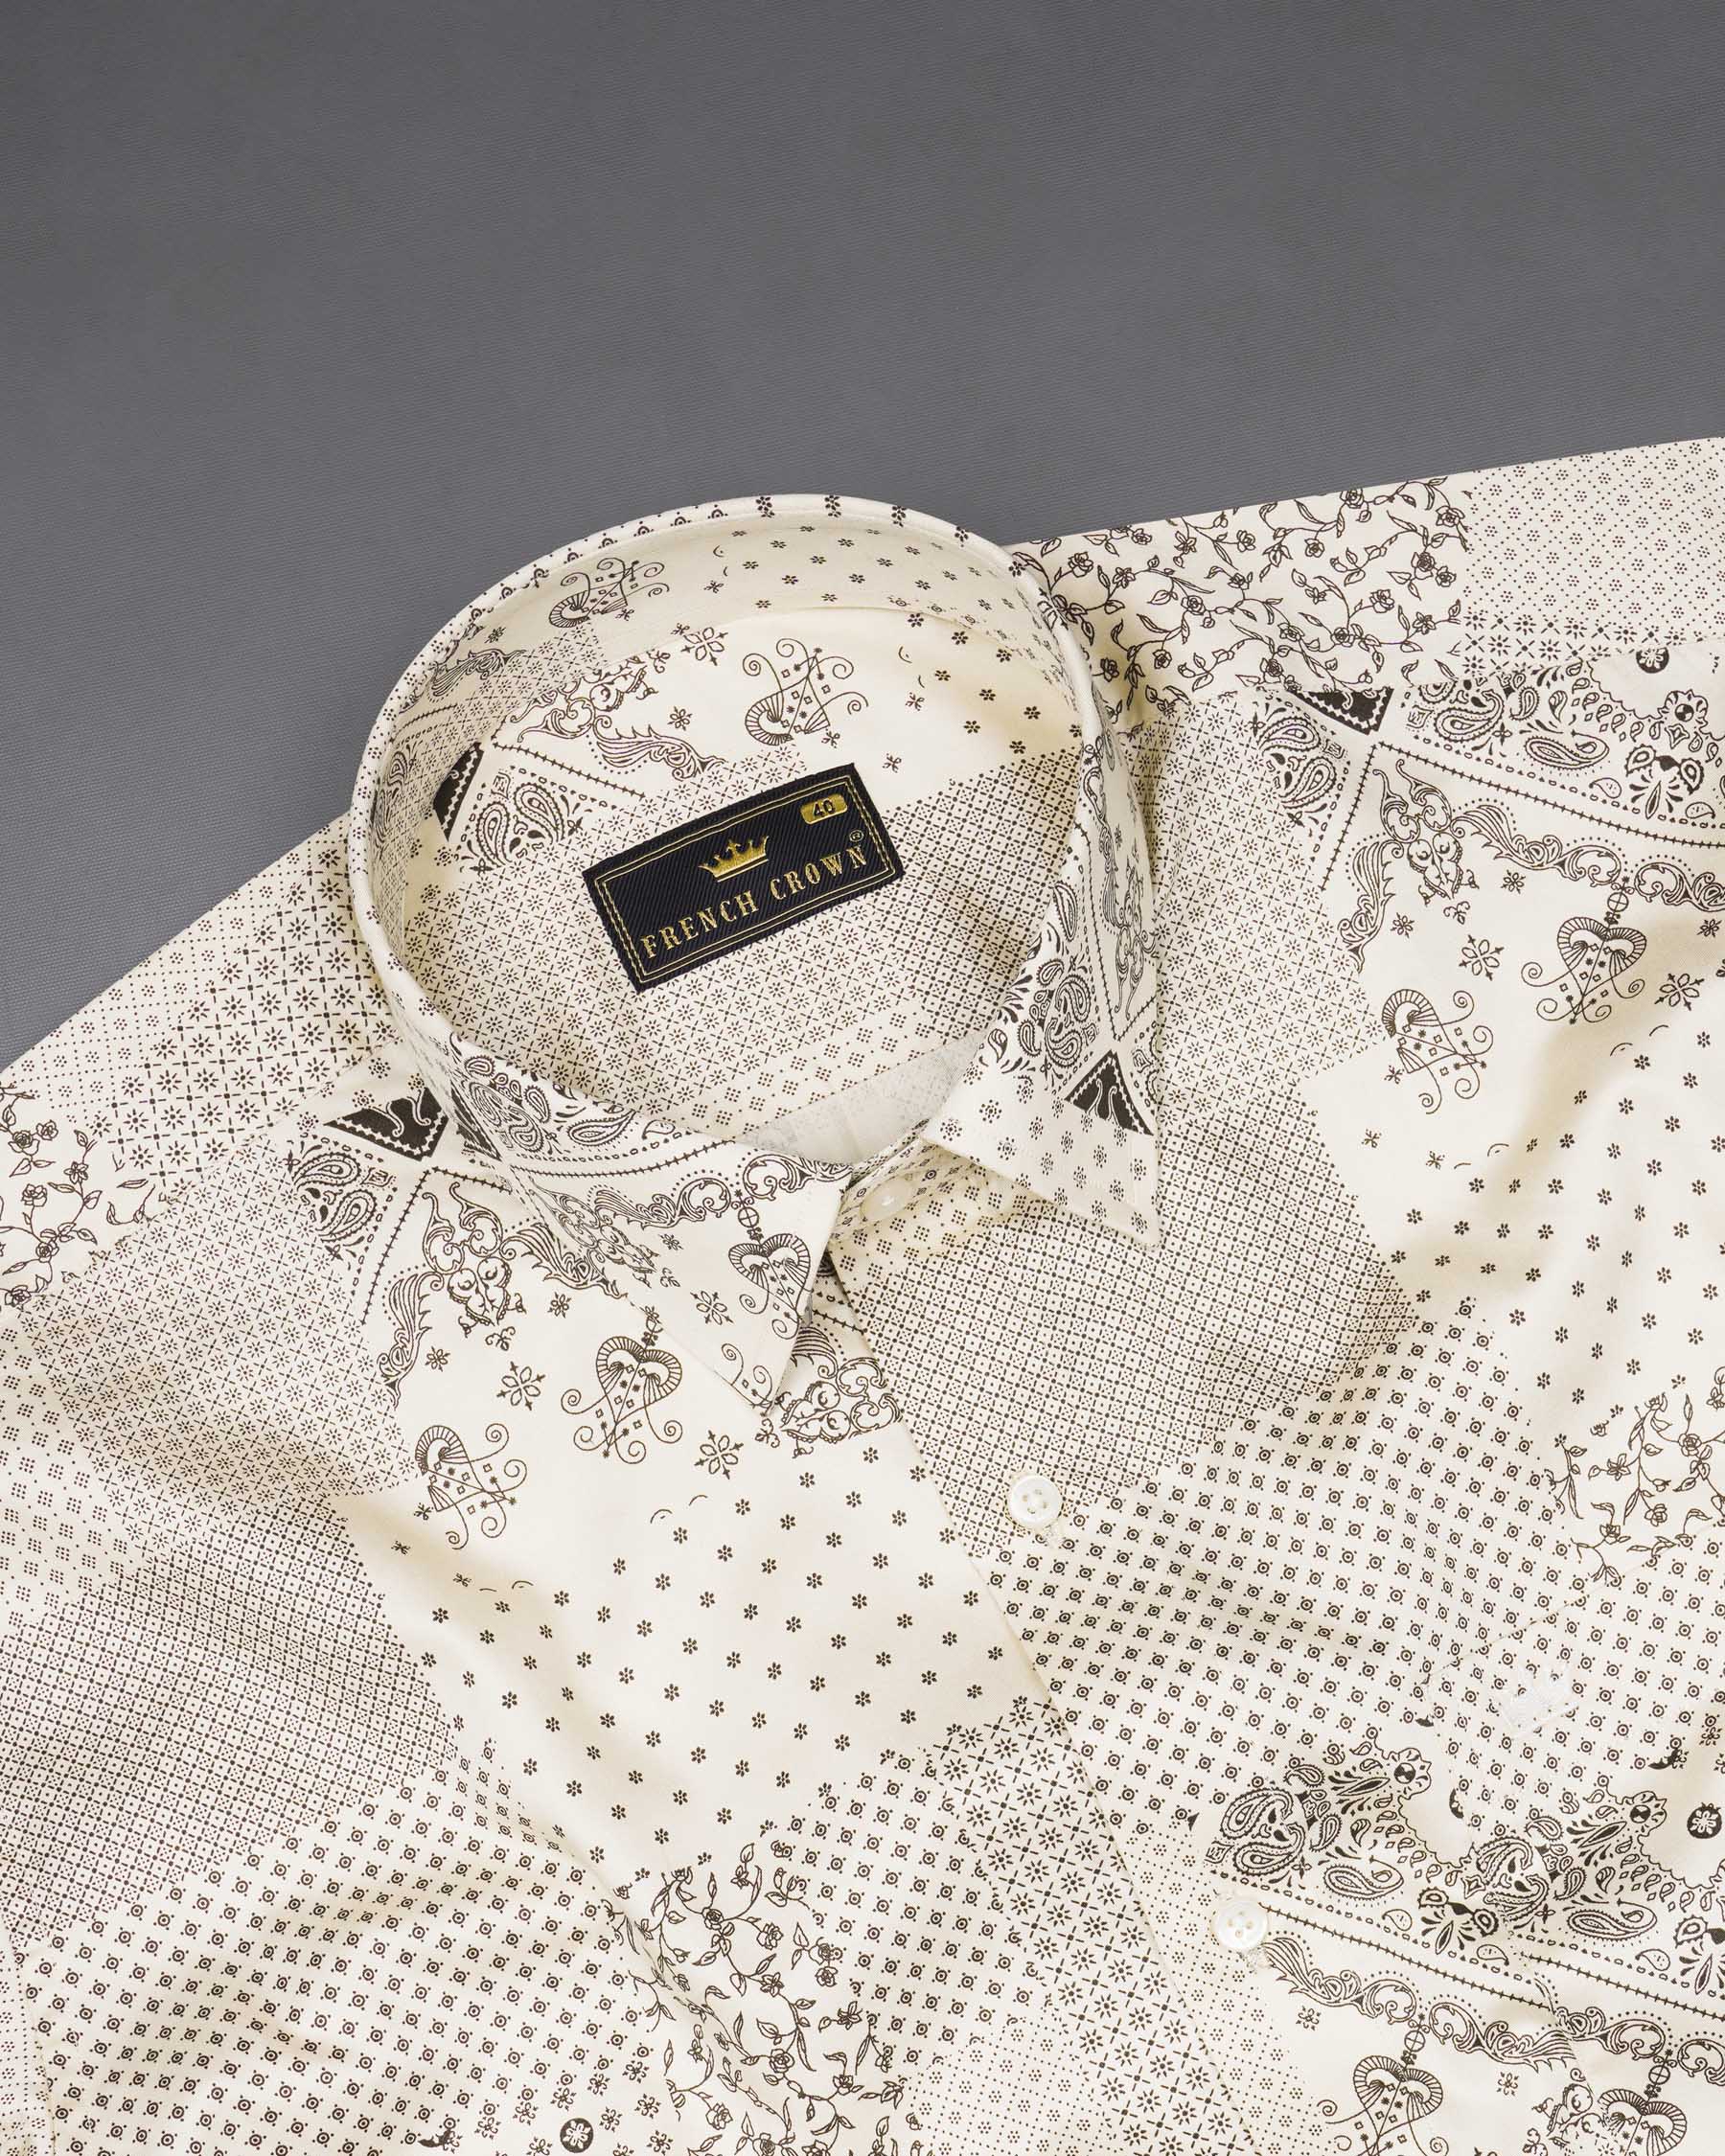 Pearl Bush Cream Boho Chic Printed Super Soft Premium Cotton Shirt 7803-38,7803-38,7803-39,7803-39,7803-40,7803-40,7803-42,7803-42,7803-44,7803-44,7803-46,7803-46,7803-48,7803-48,7803-50,7803-50,7803-52,7803-52